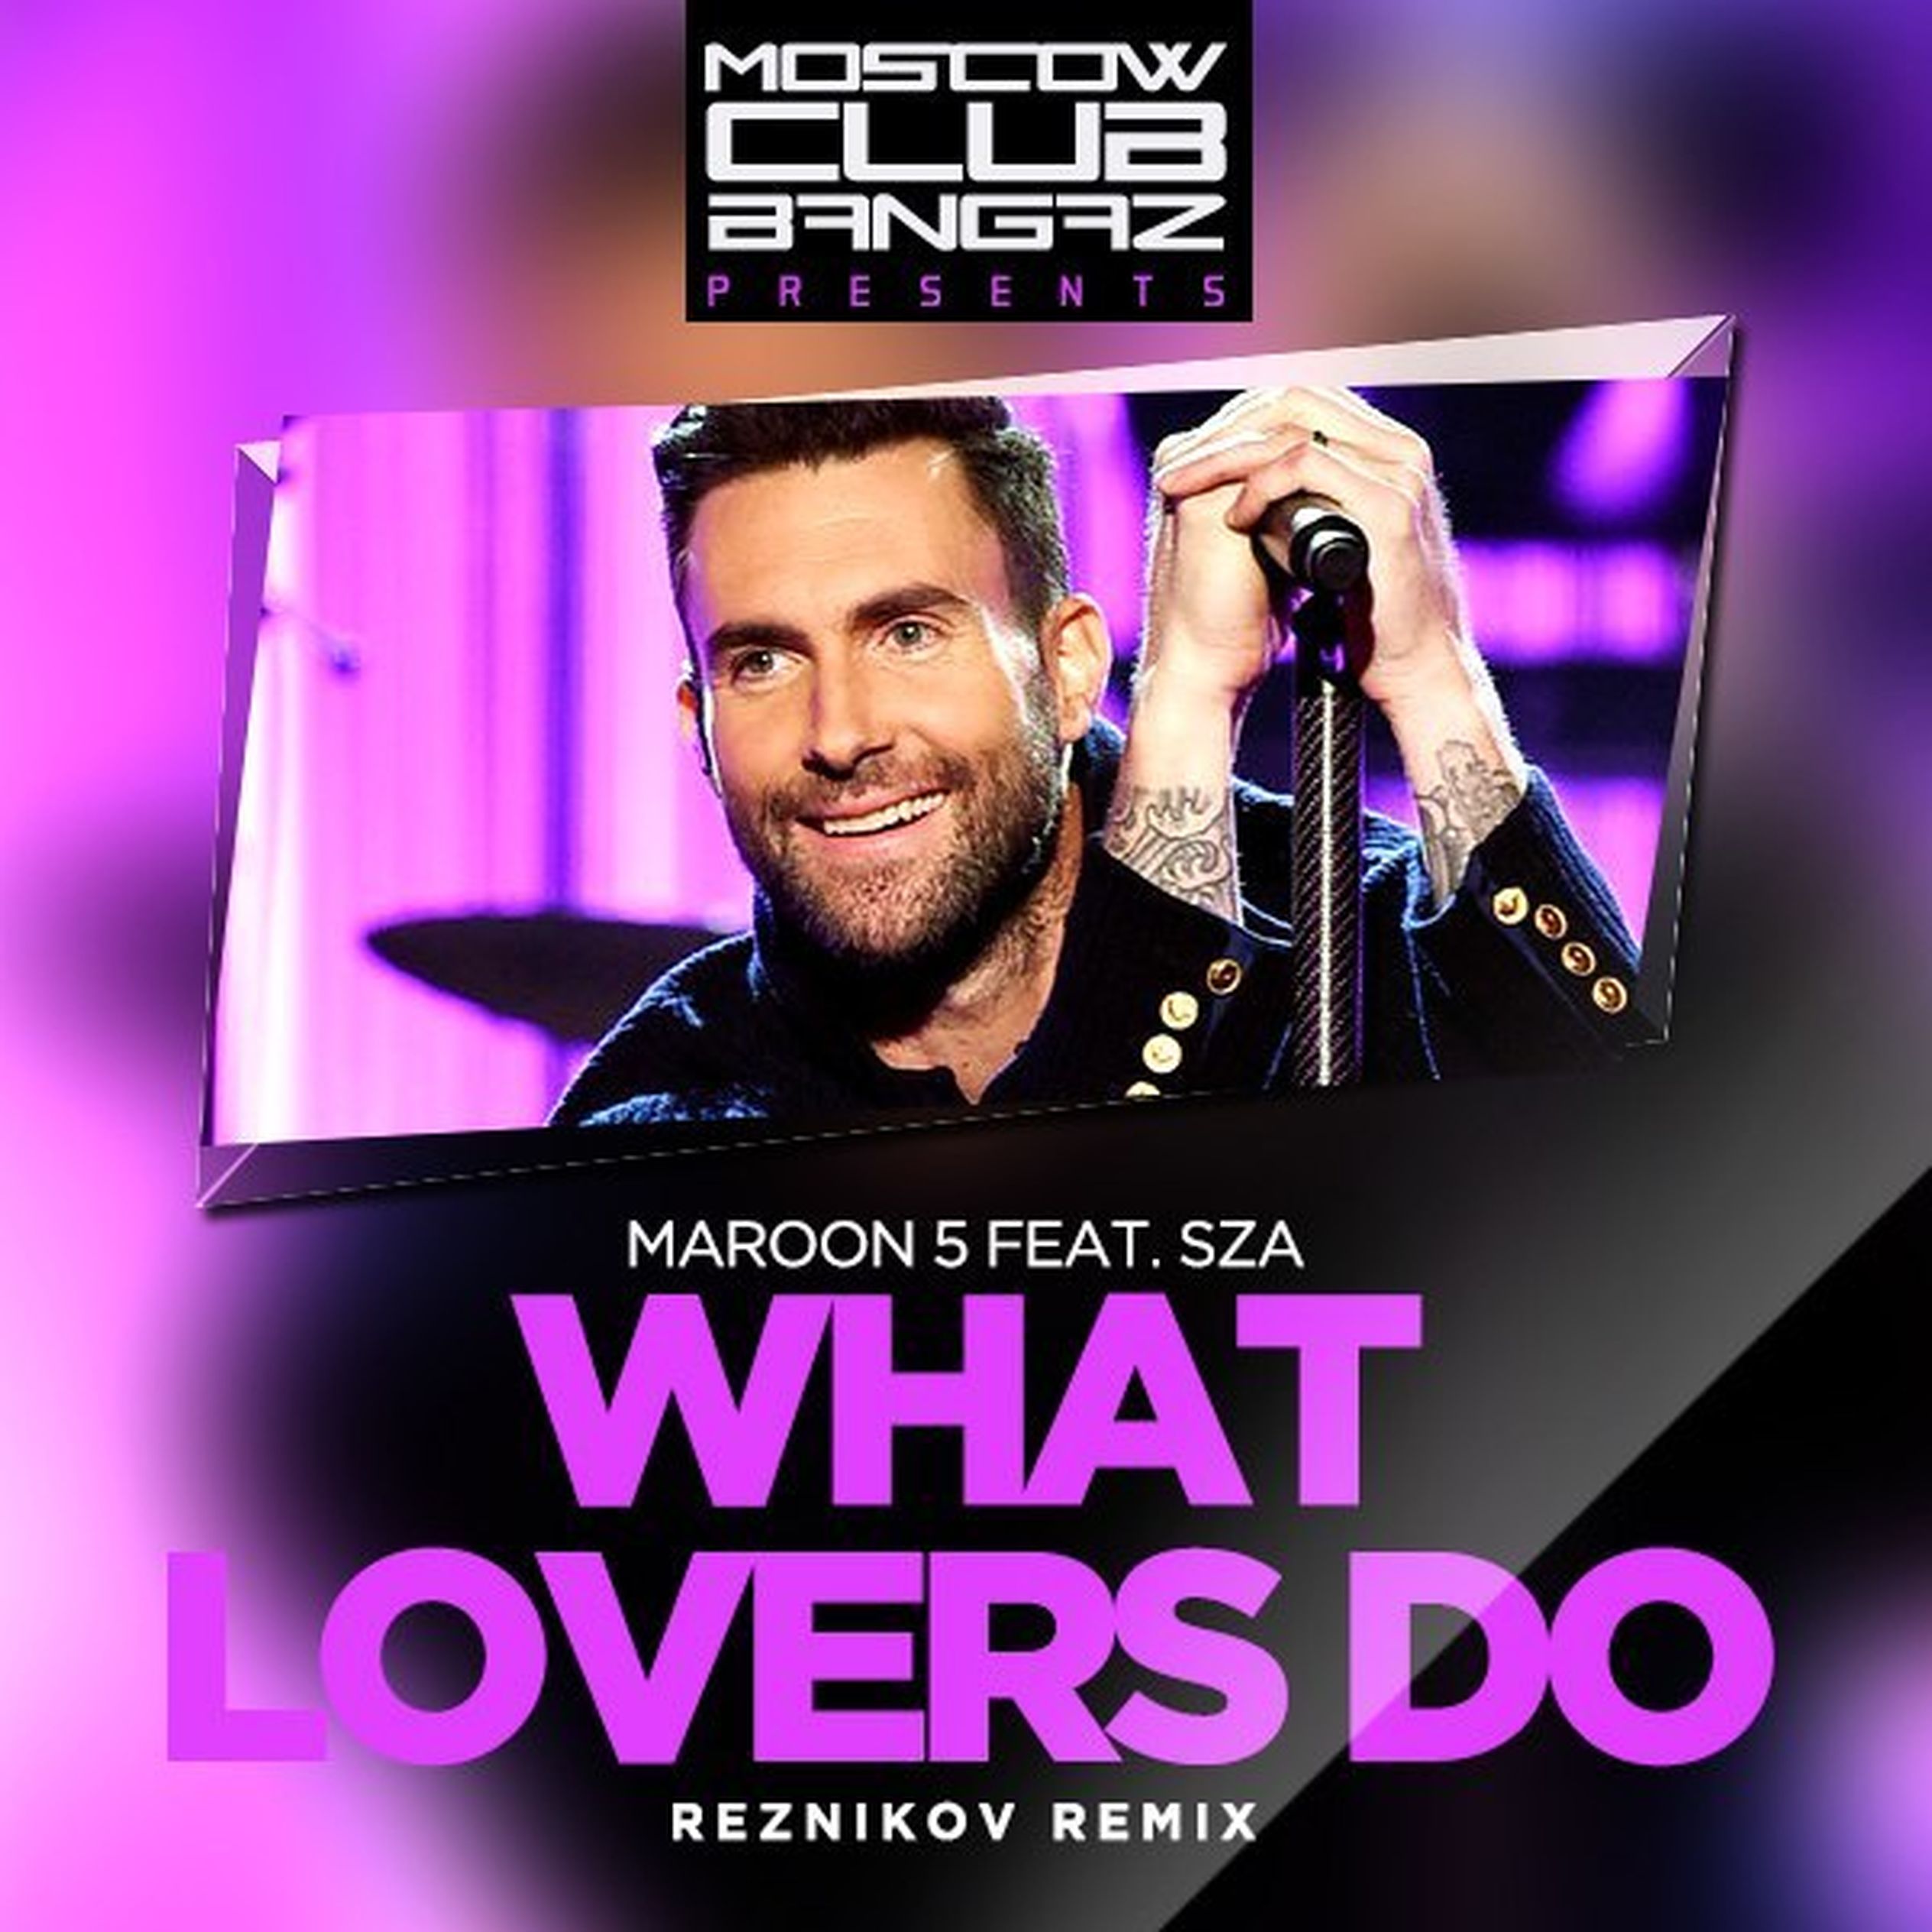 Maroon 5 feat. SZA. Maroon 5 - what lovers do. Maroon 5 feat. SZA - what lovers do. Denis first Remix. Maroon feat